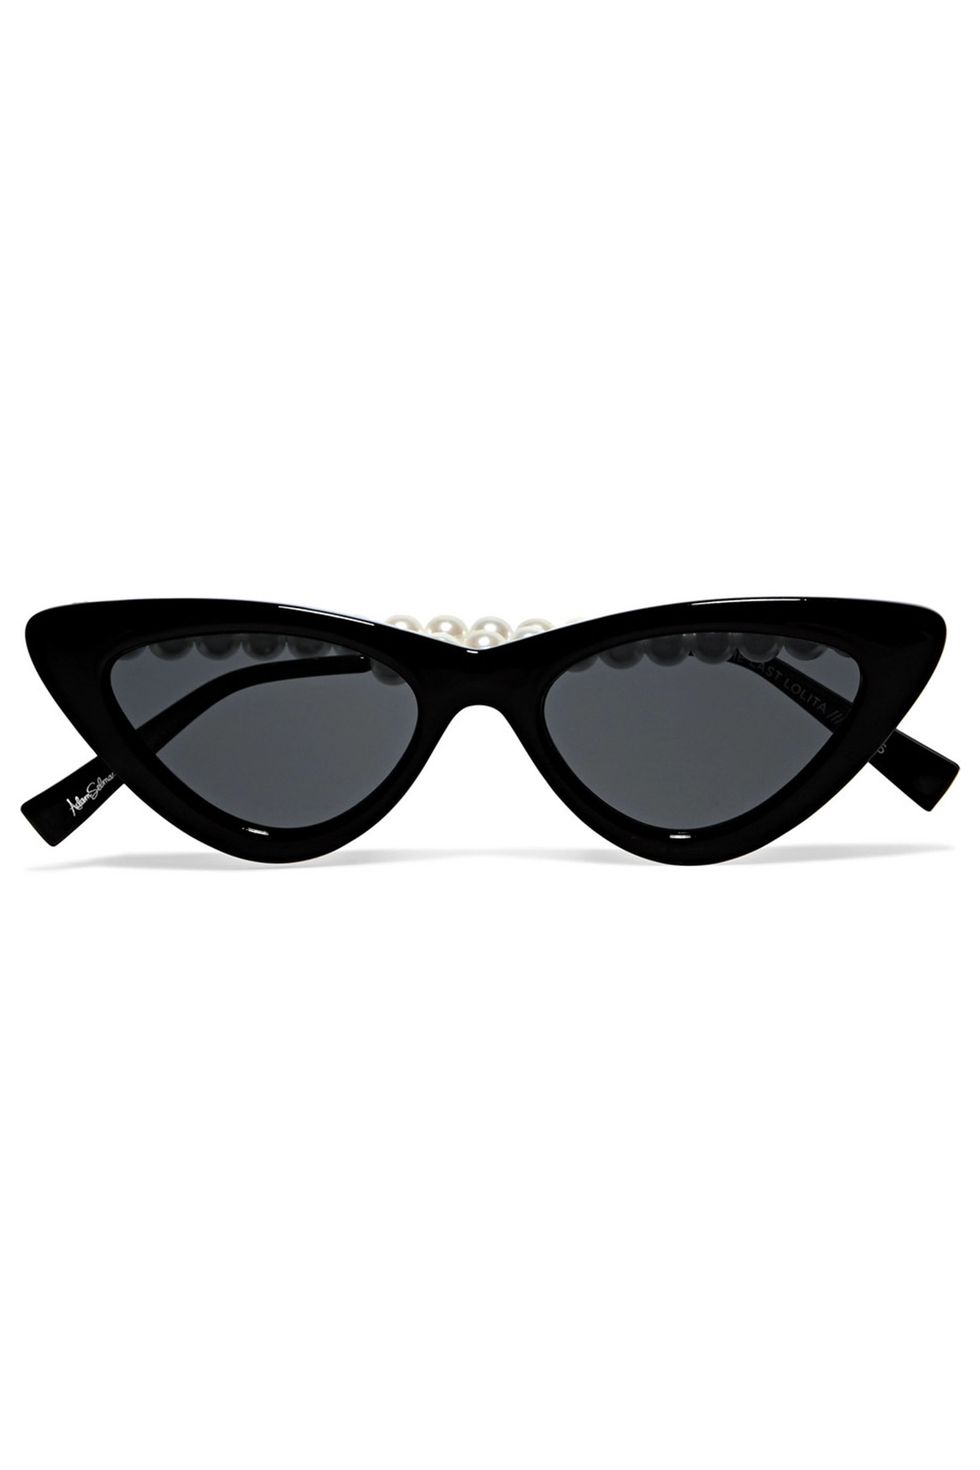 The Last Lolita Sunglasses